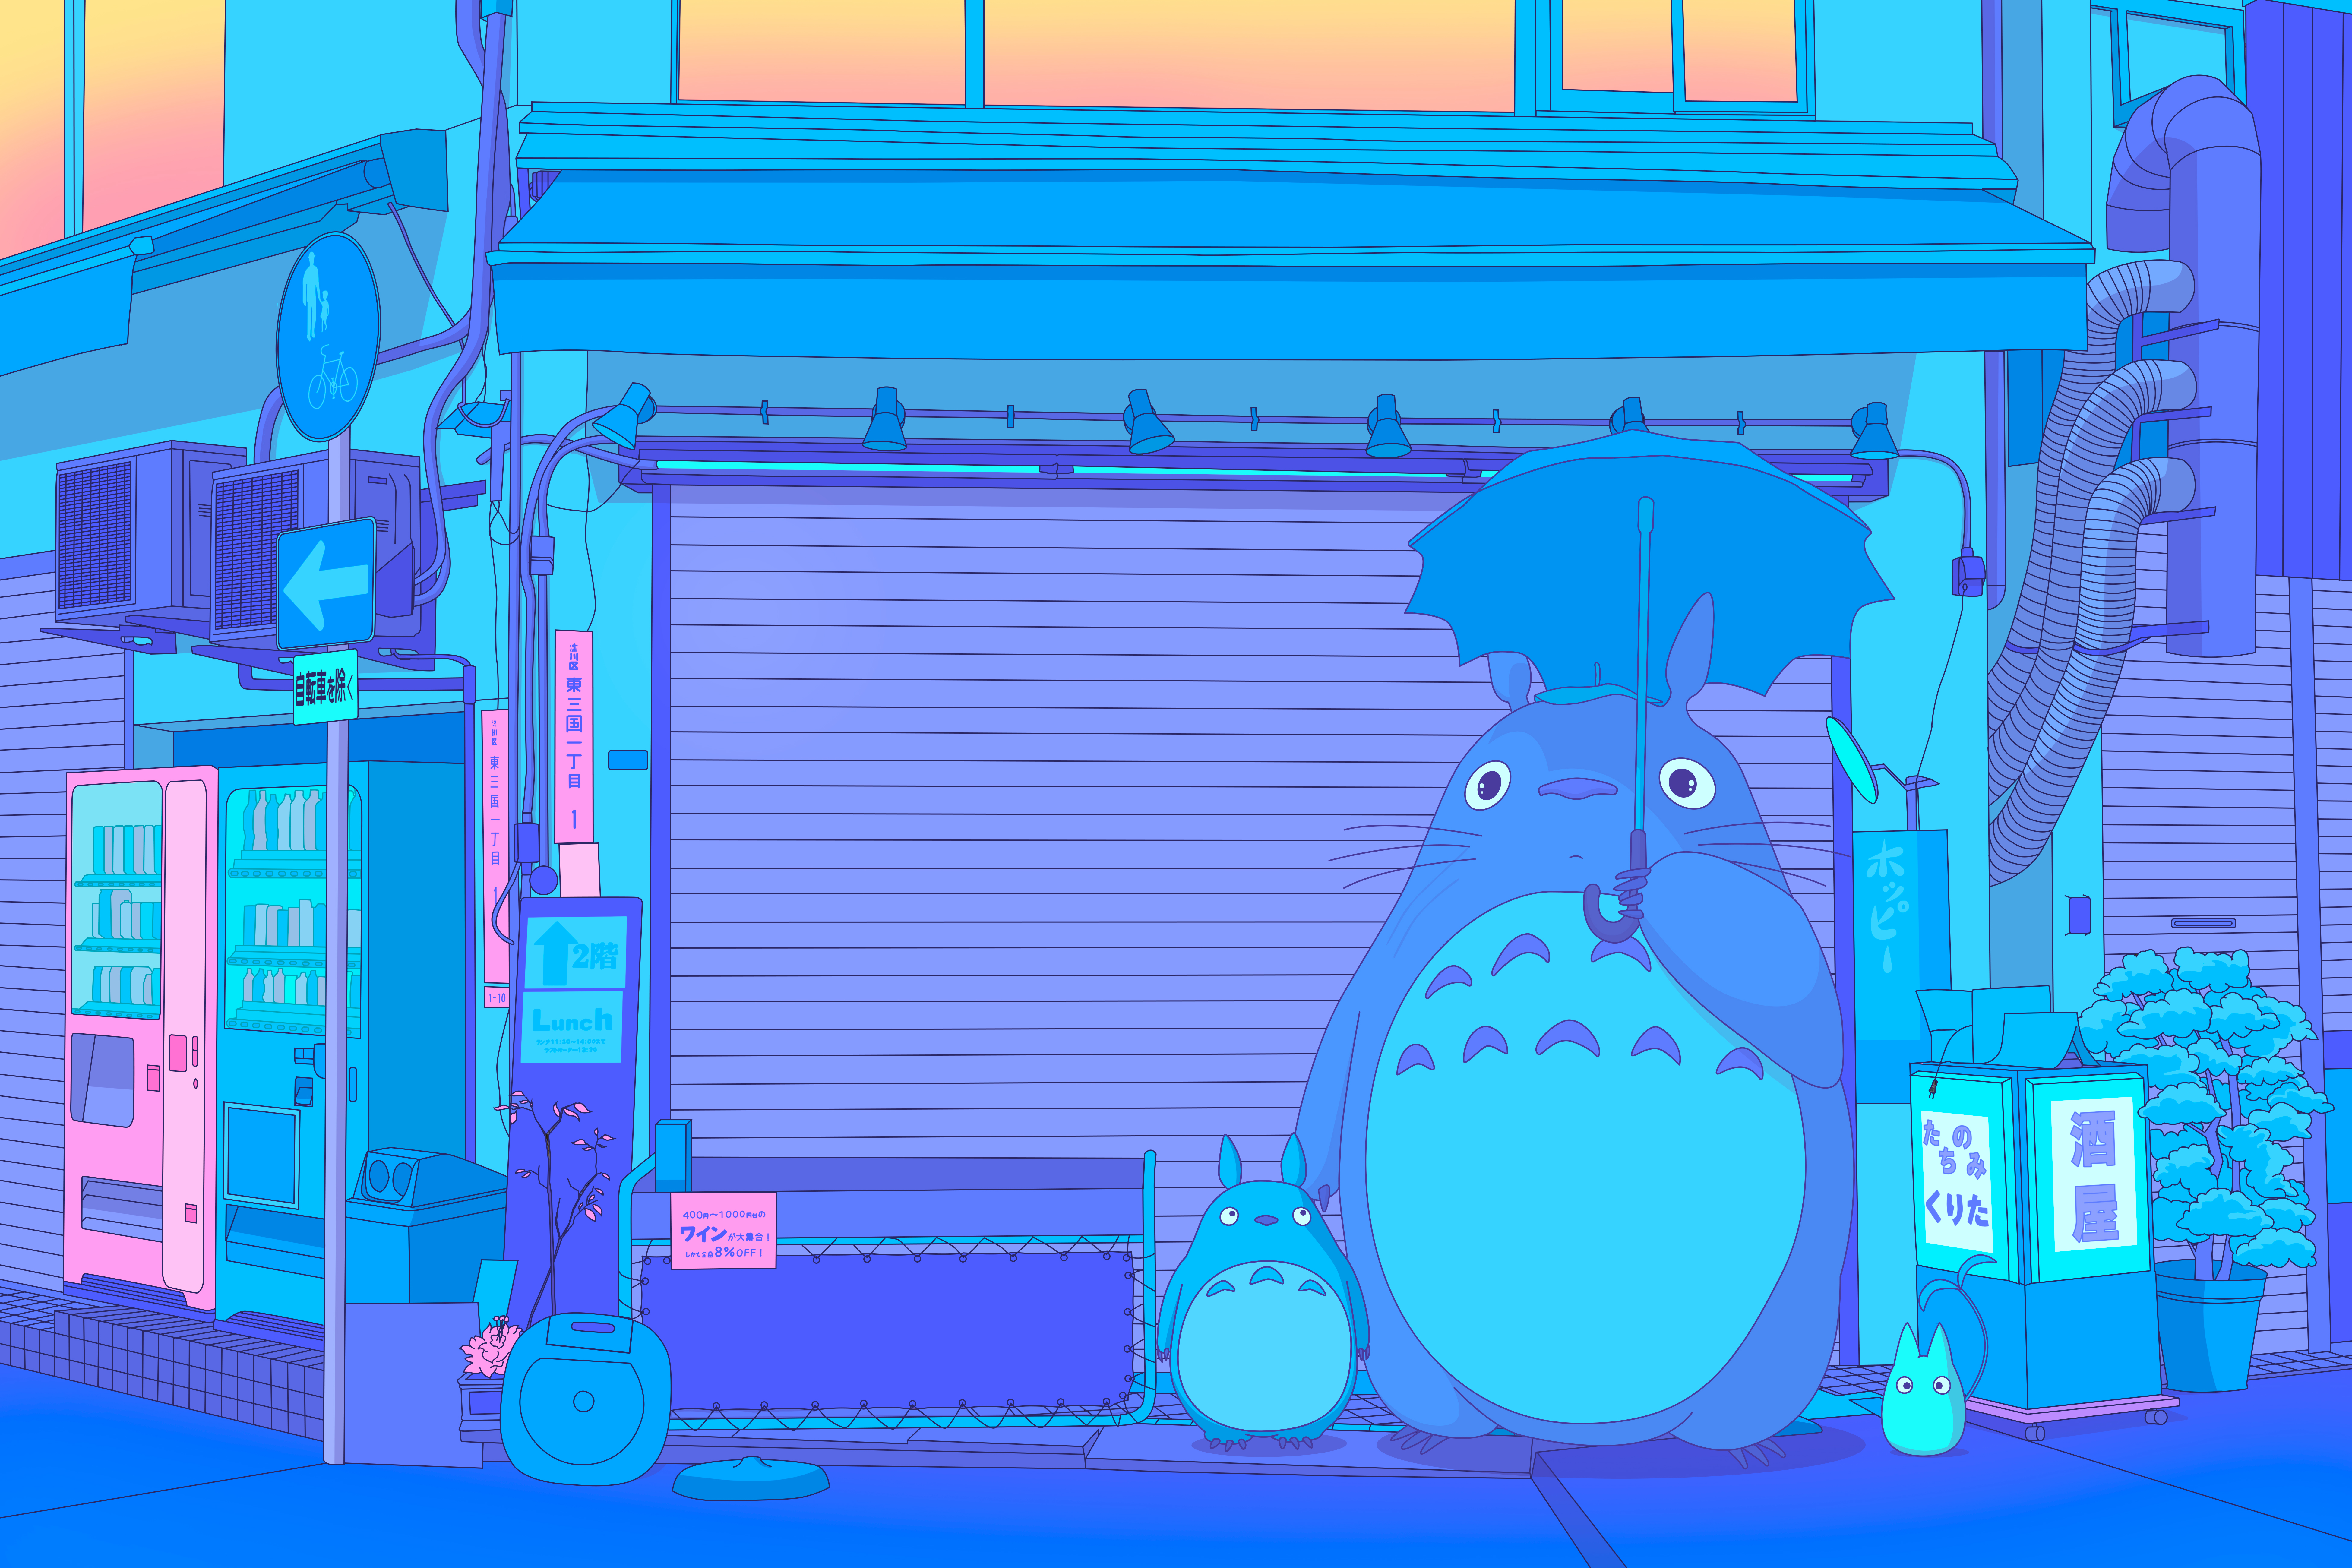 General 7800x5200 exhozt digital art artwork illustration street blue Totoro My Neighbor Totoro anime creature umbrella